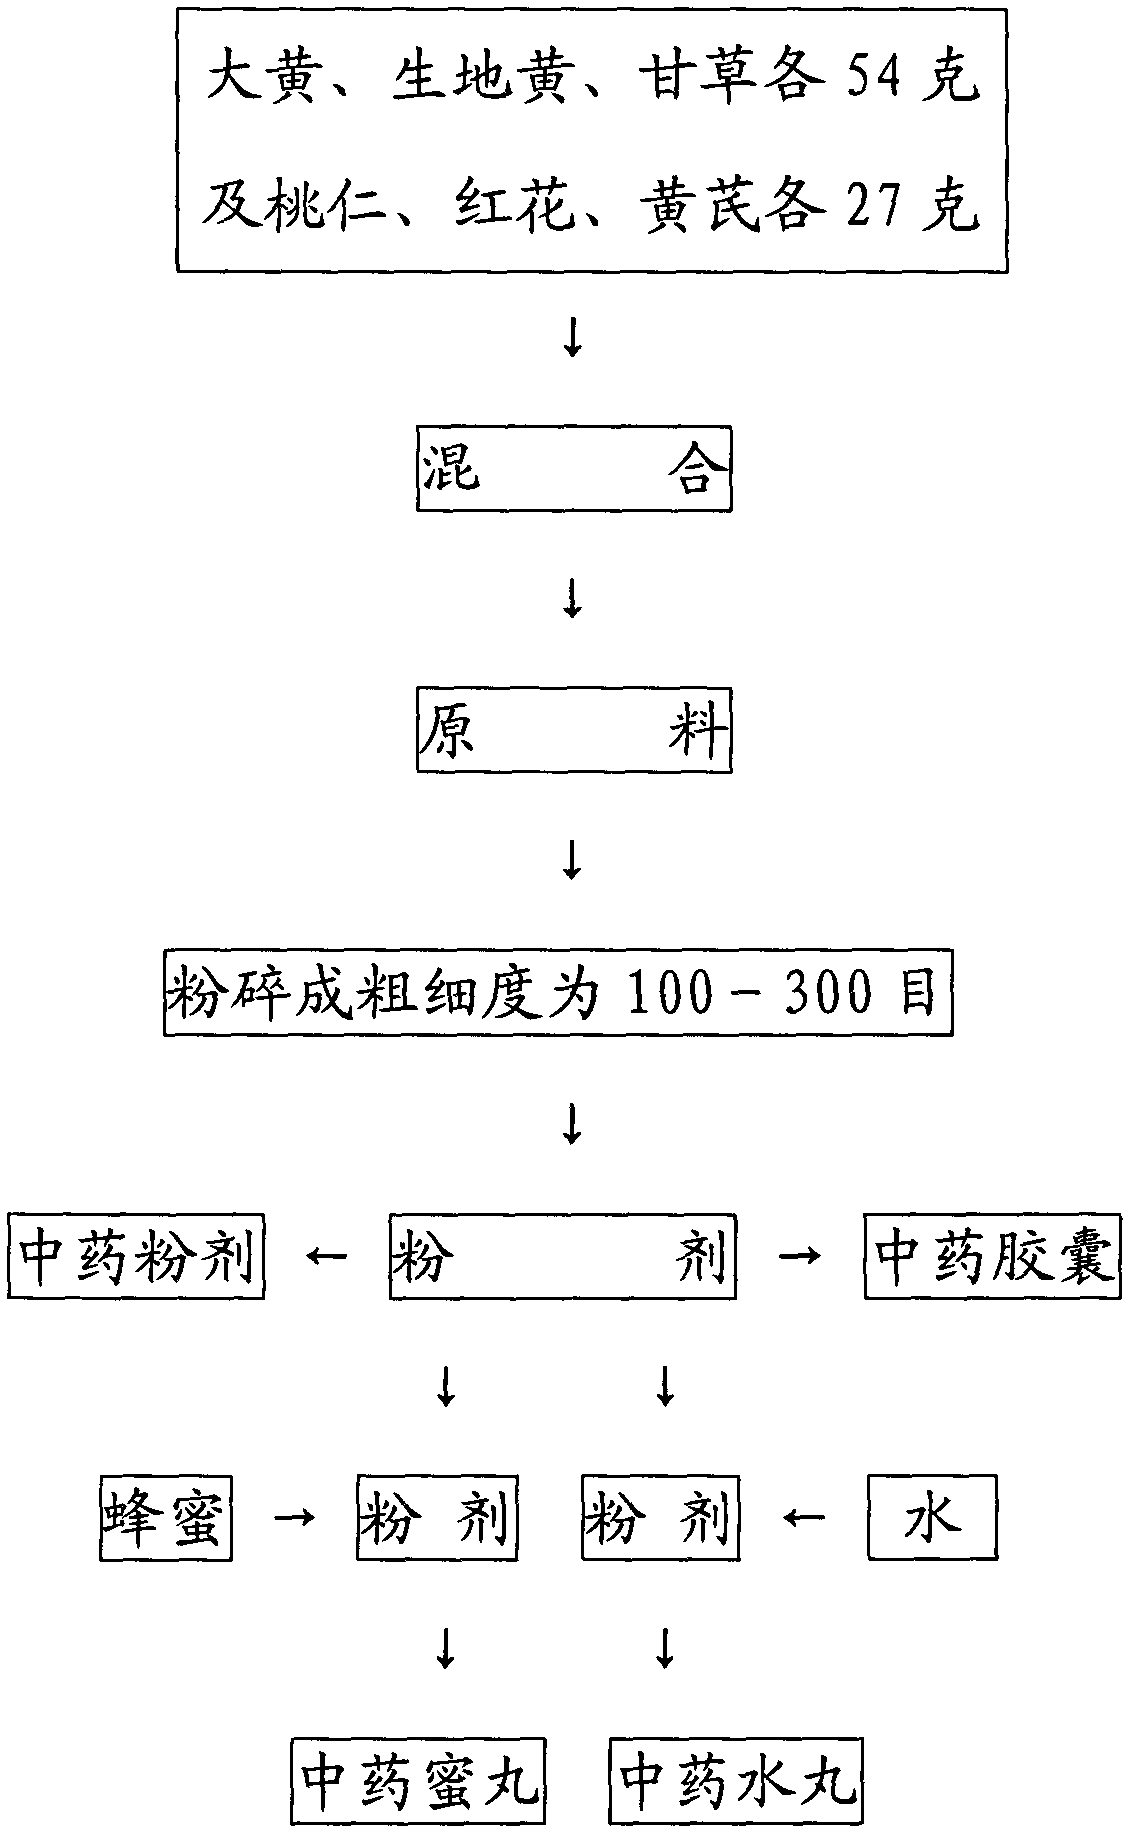 Manufacture method of Chinese medicine for regulating catamenia